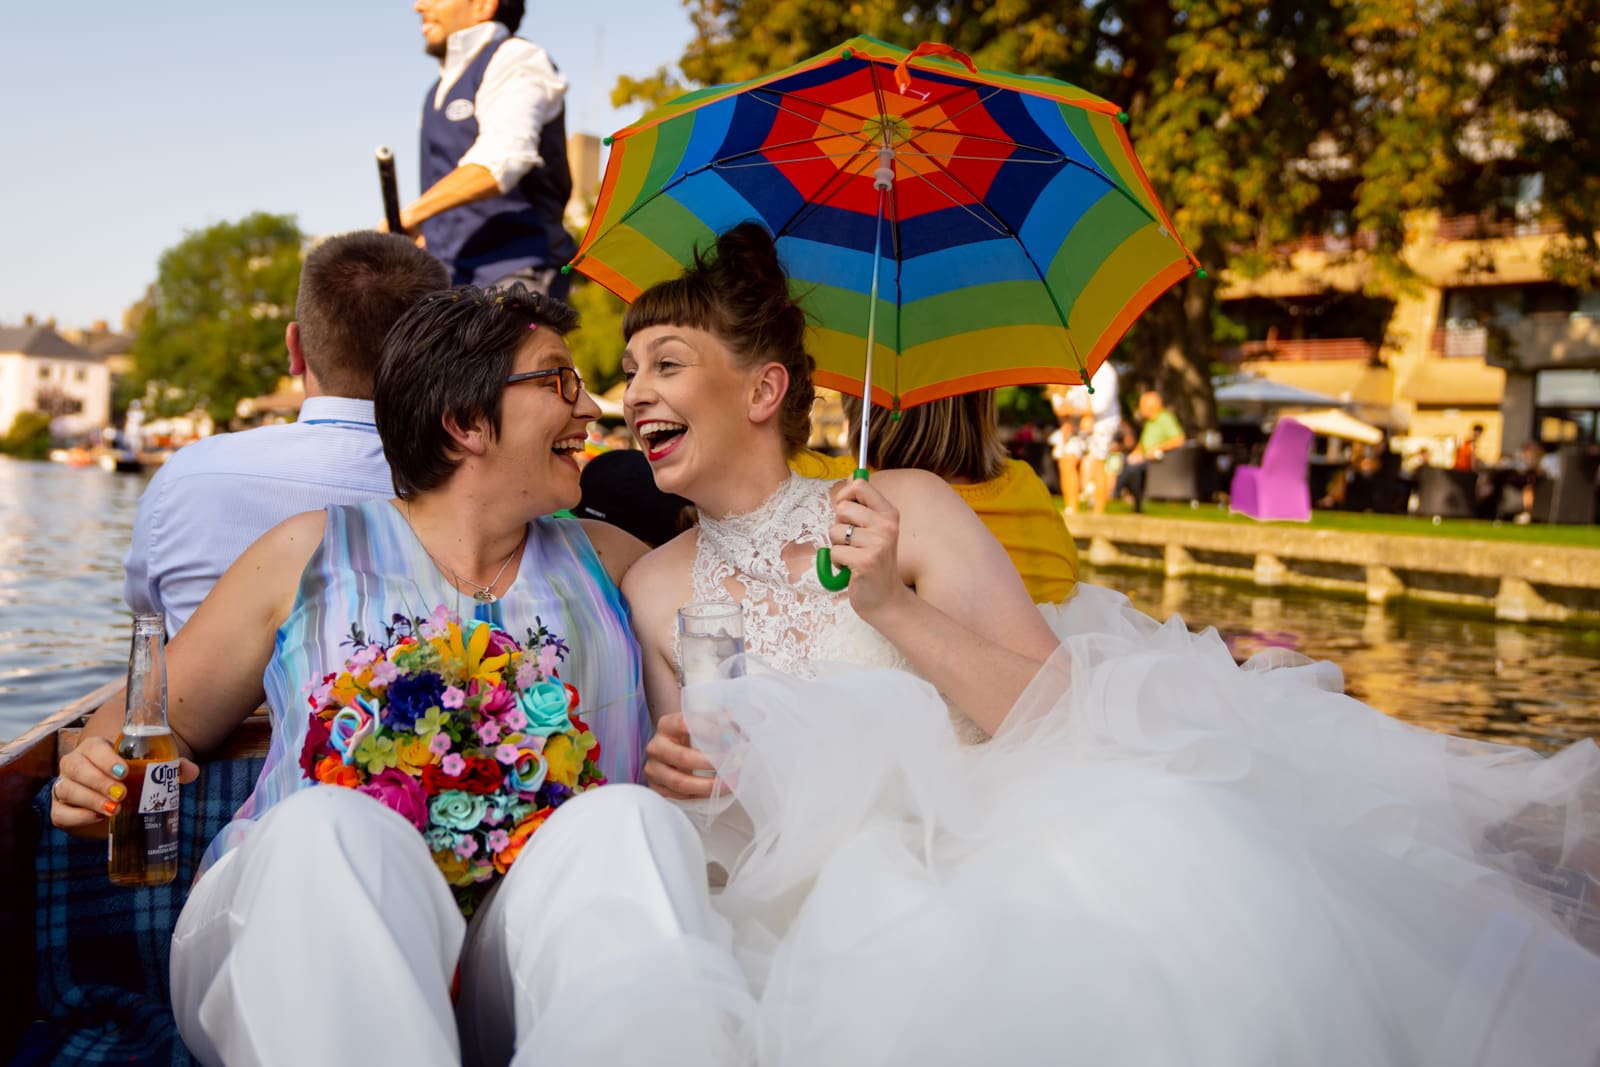 Colourful wedding photography – so many rainbows!